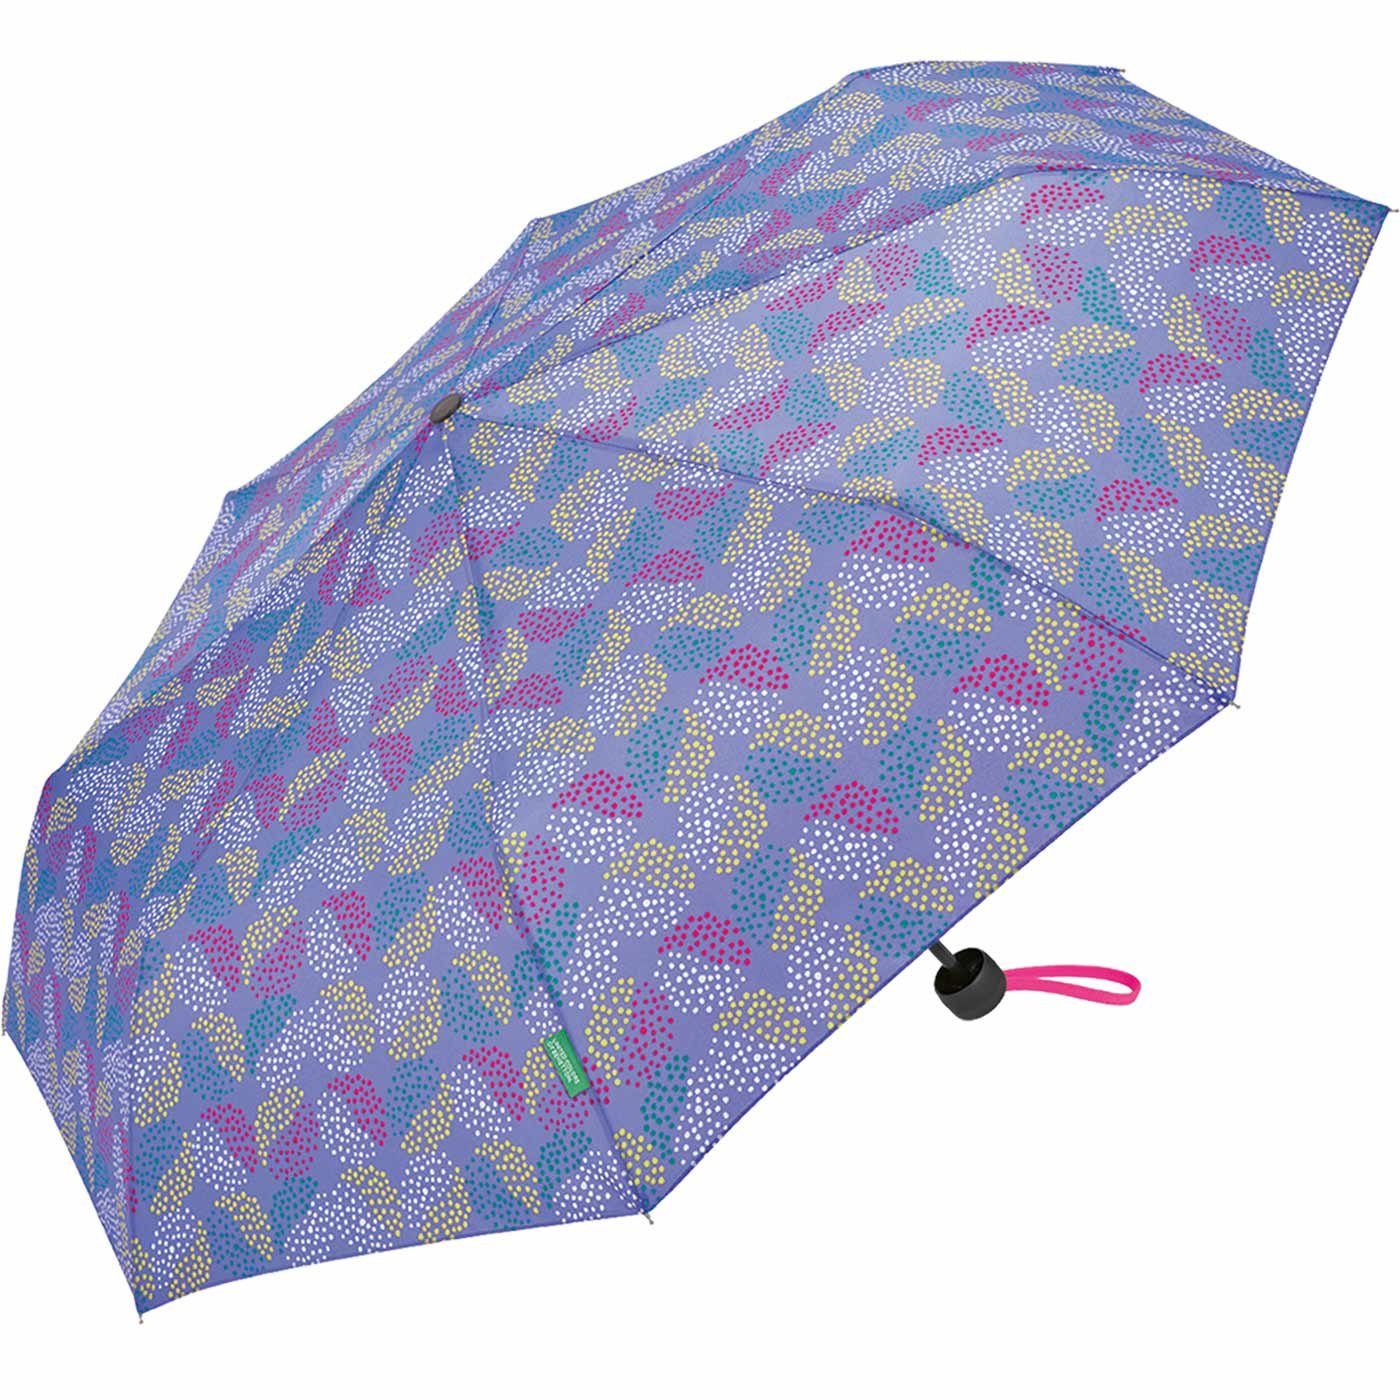 mit United Colors violett - Dots Benetton periwinkle, modernem Pop deep Punkte-Kreise-Muster Super Taschenregenschirm of Mini